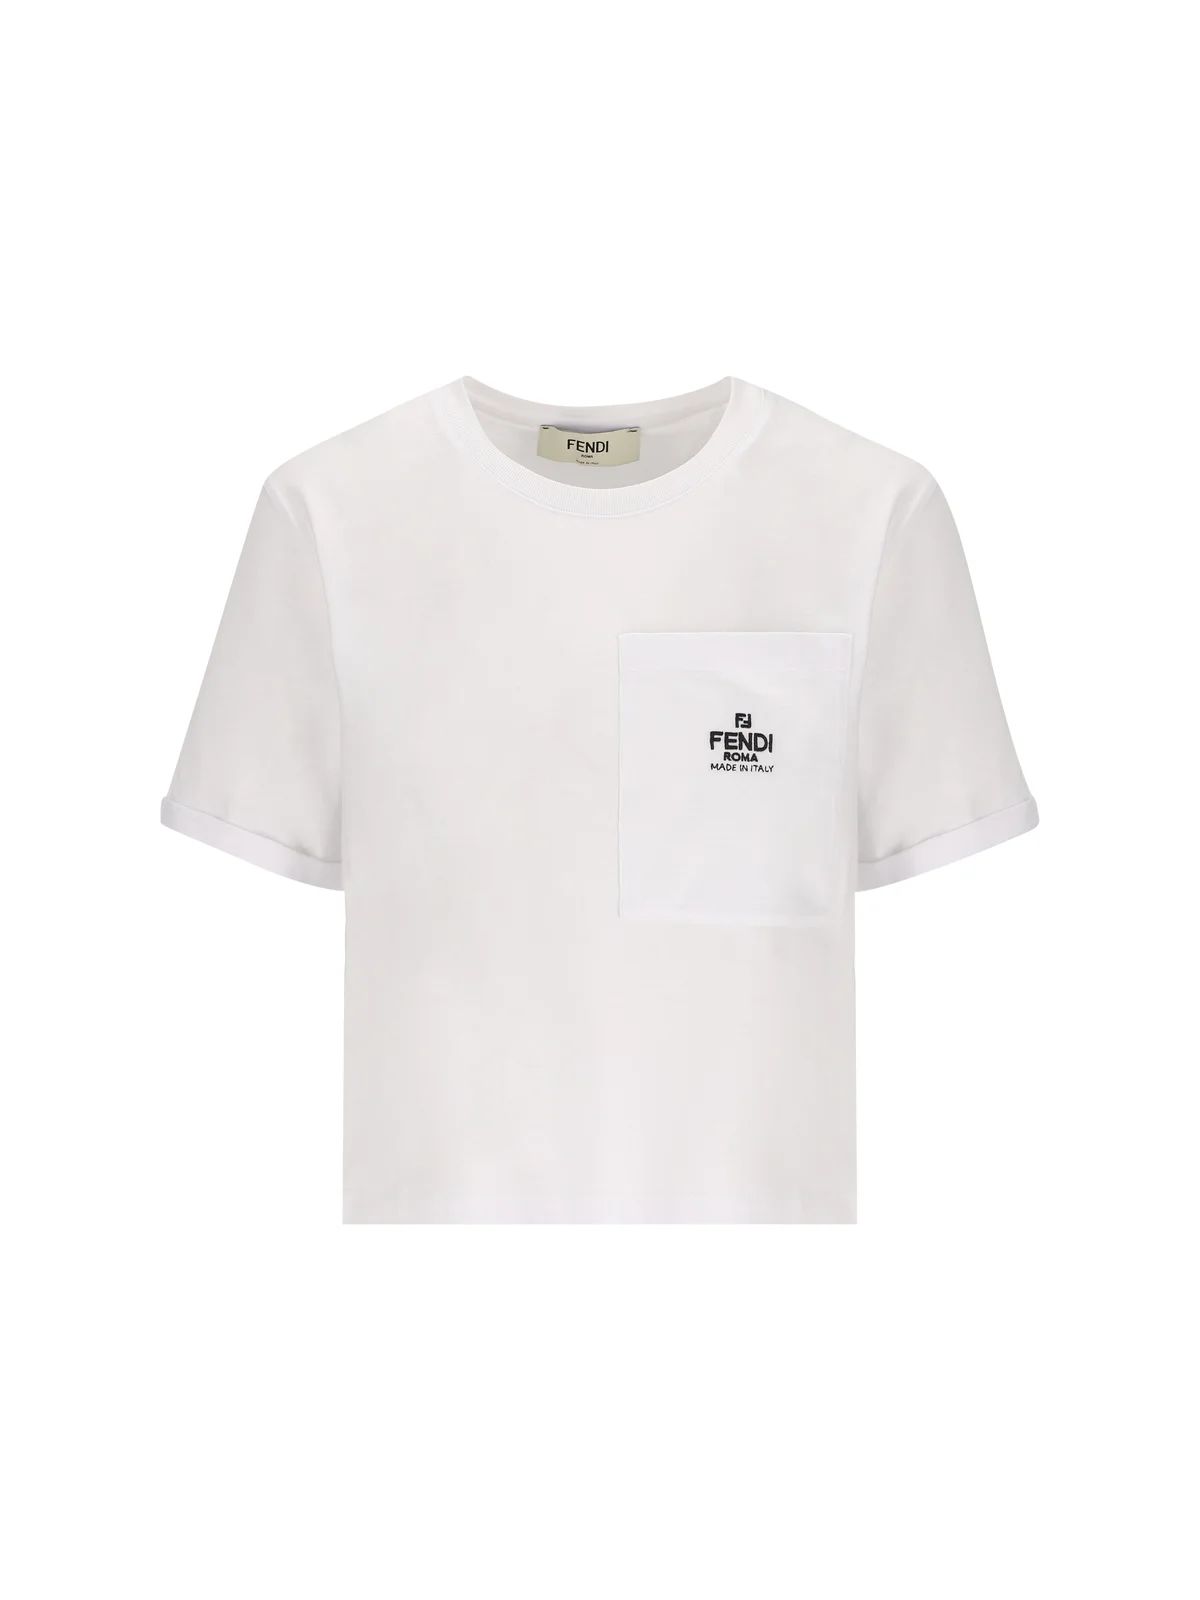 Fendi Logo Embroidered Crewneck T-Shirt | Cettire Global